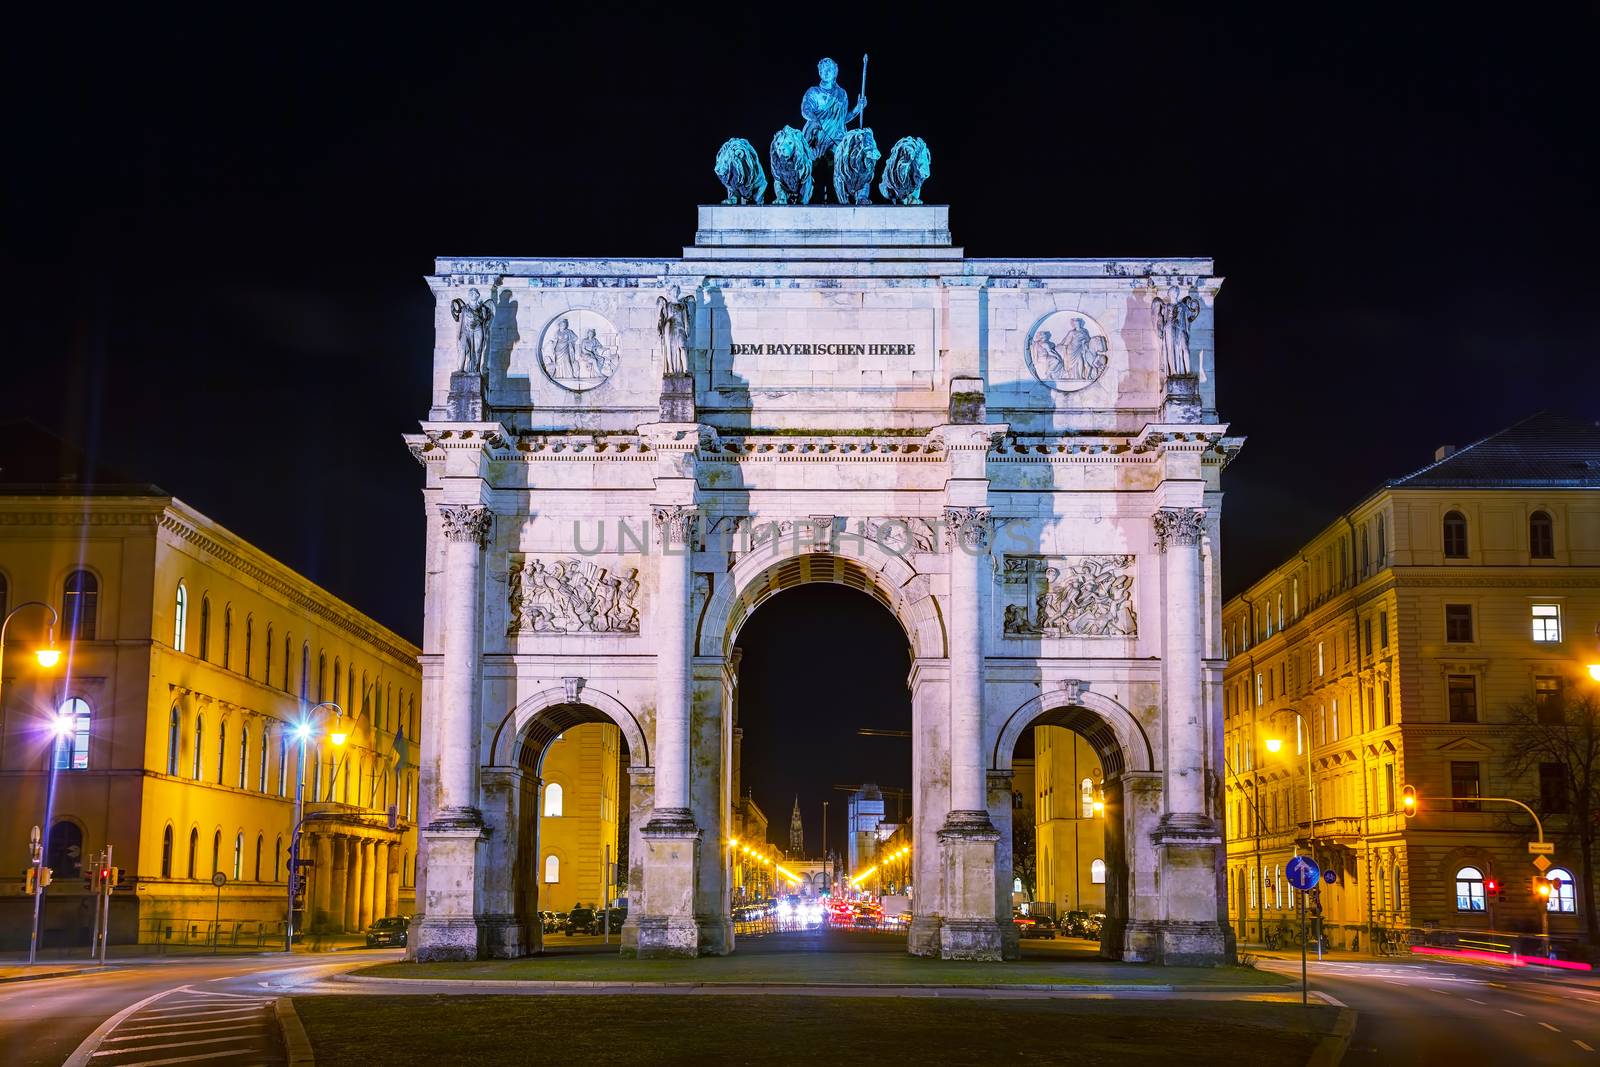 Victory Gate triumphal arch (Siegestor) in Munich, Germany at night